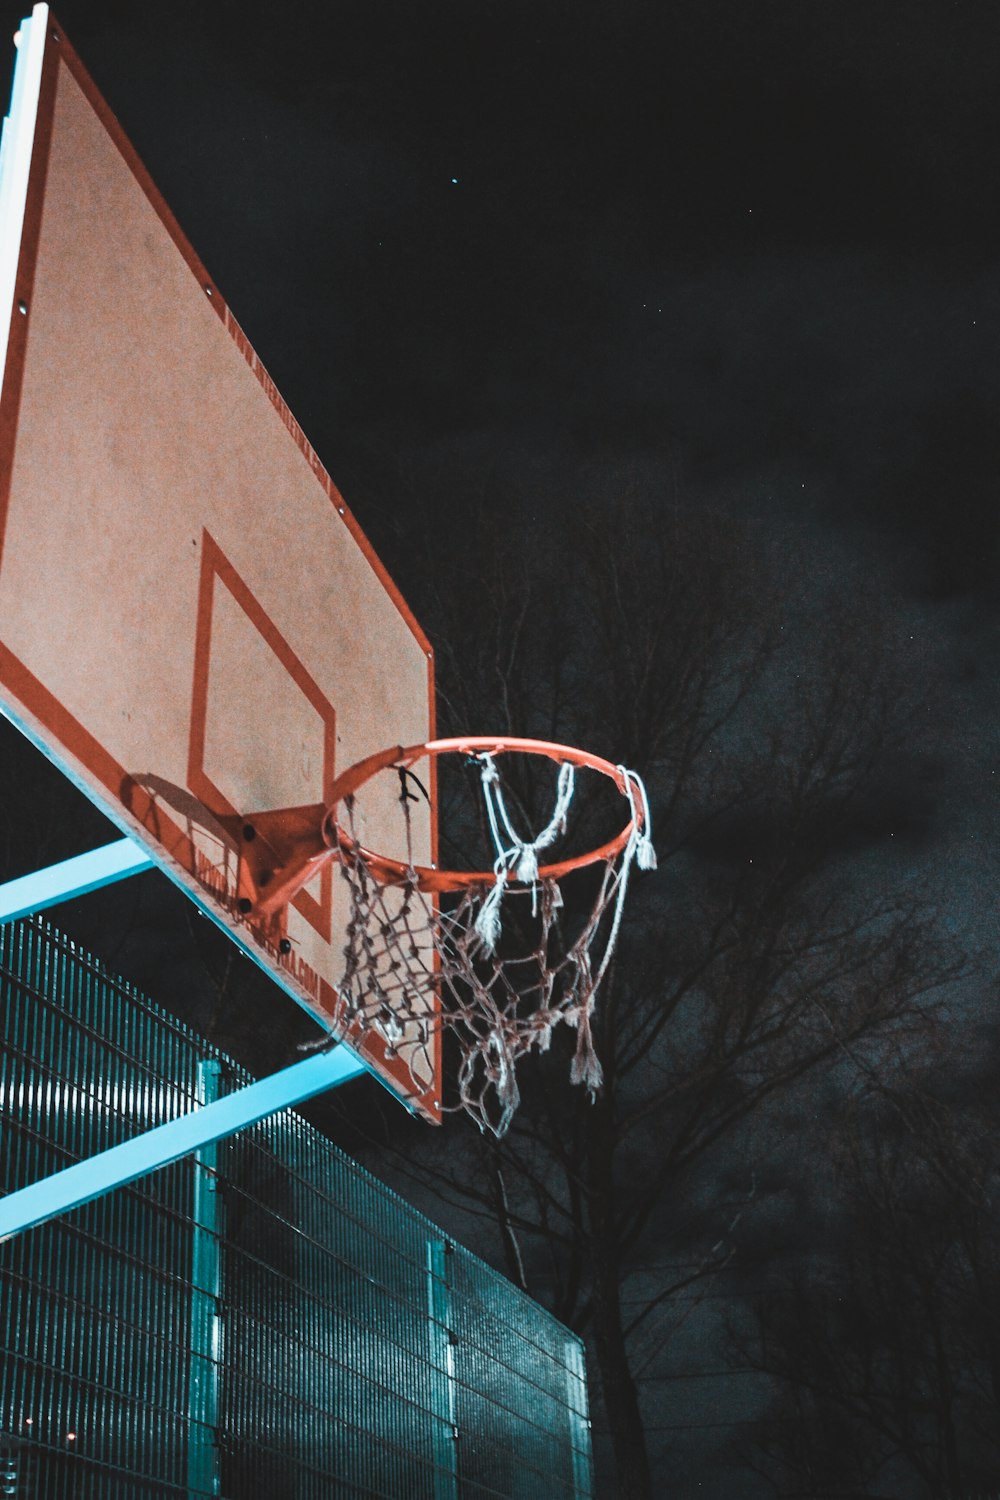 a basketball going through the hoop of a basketball court